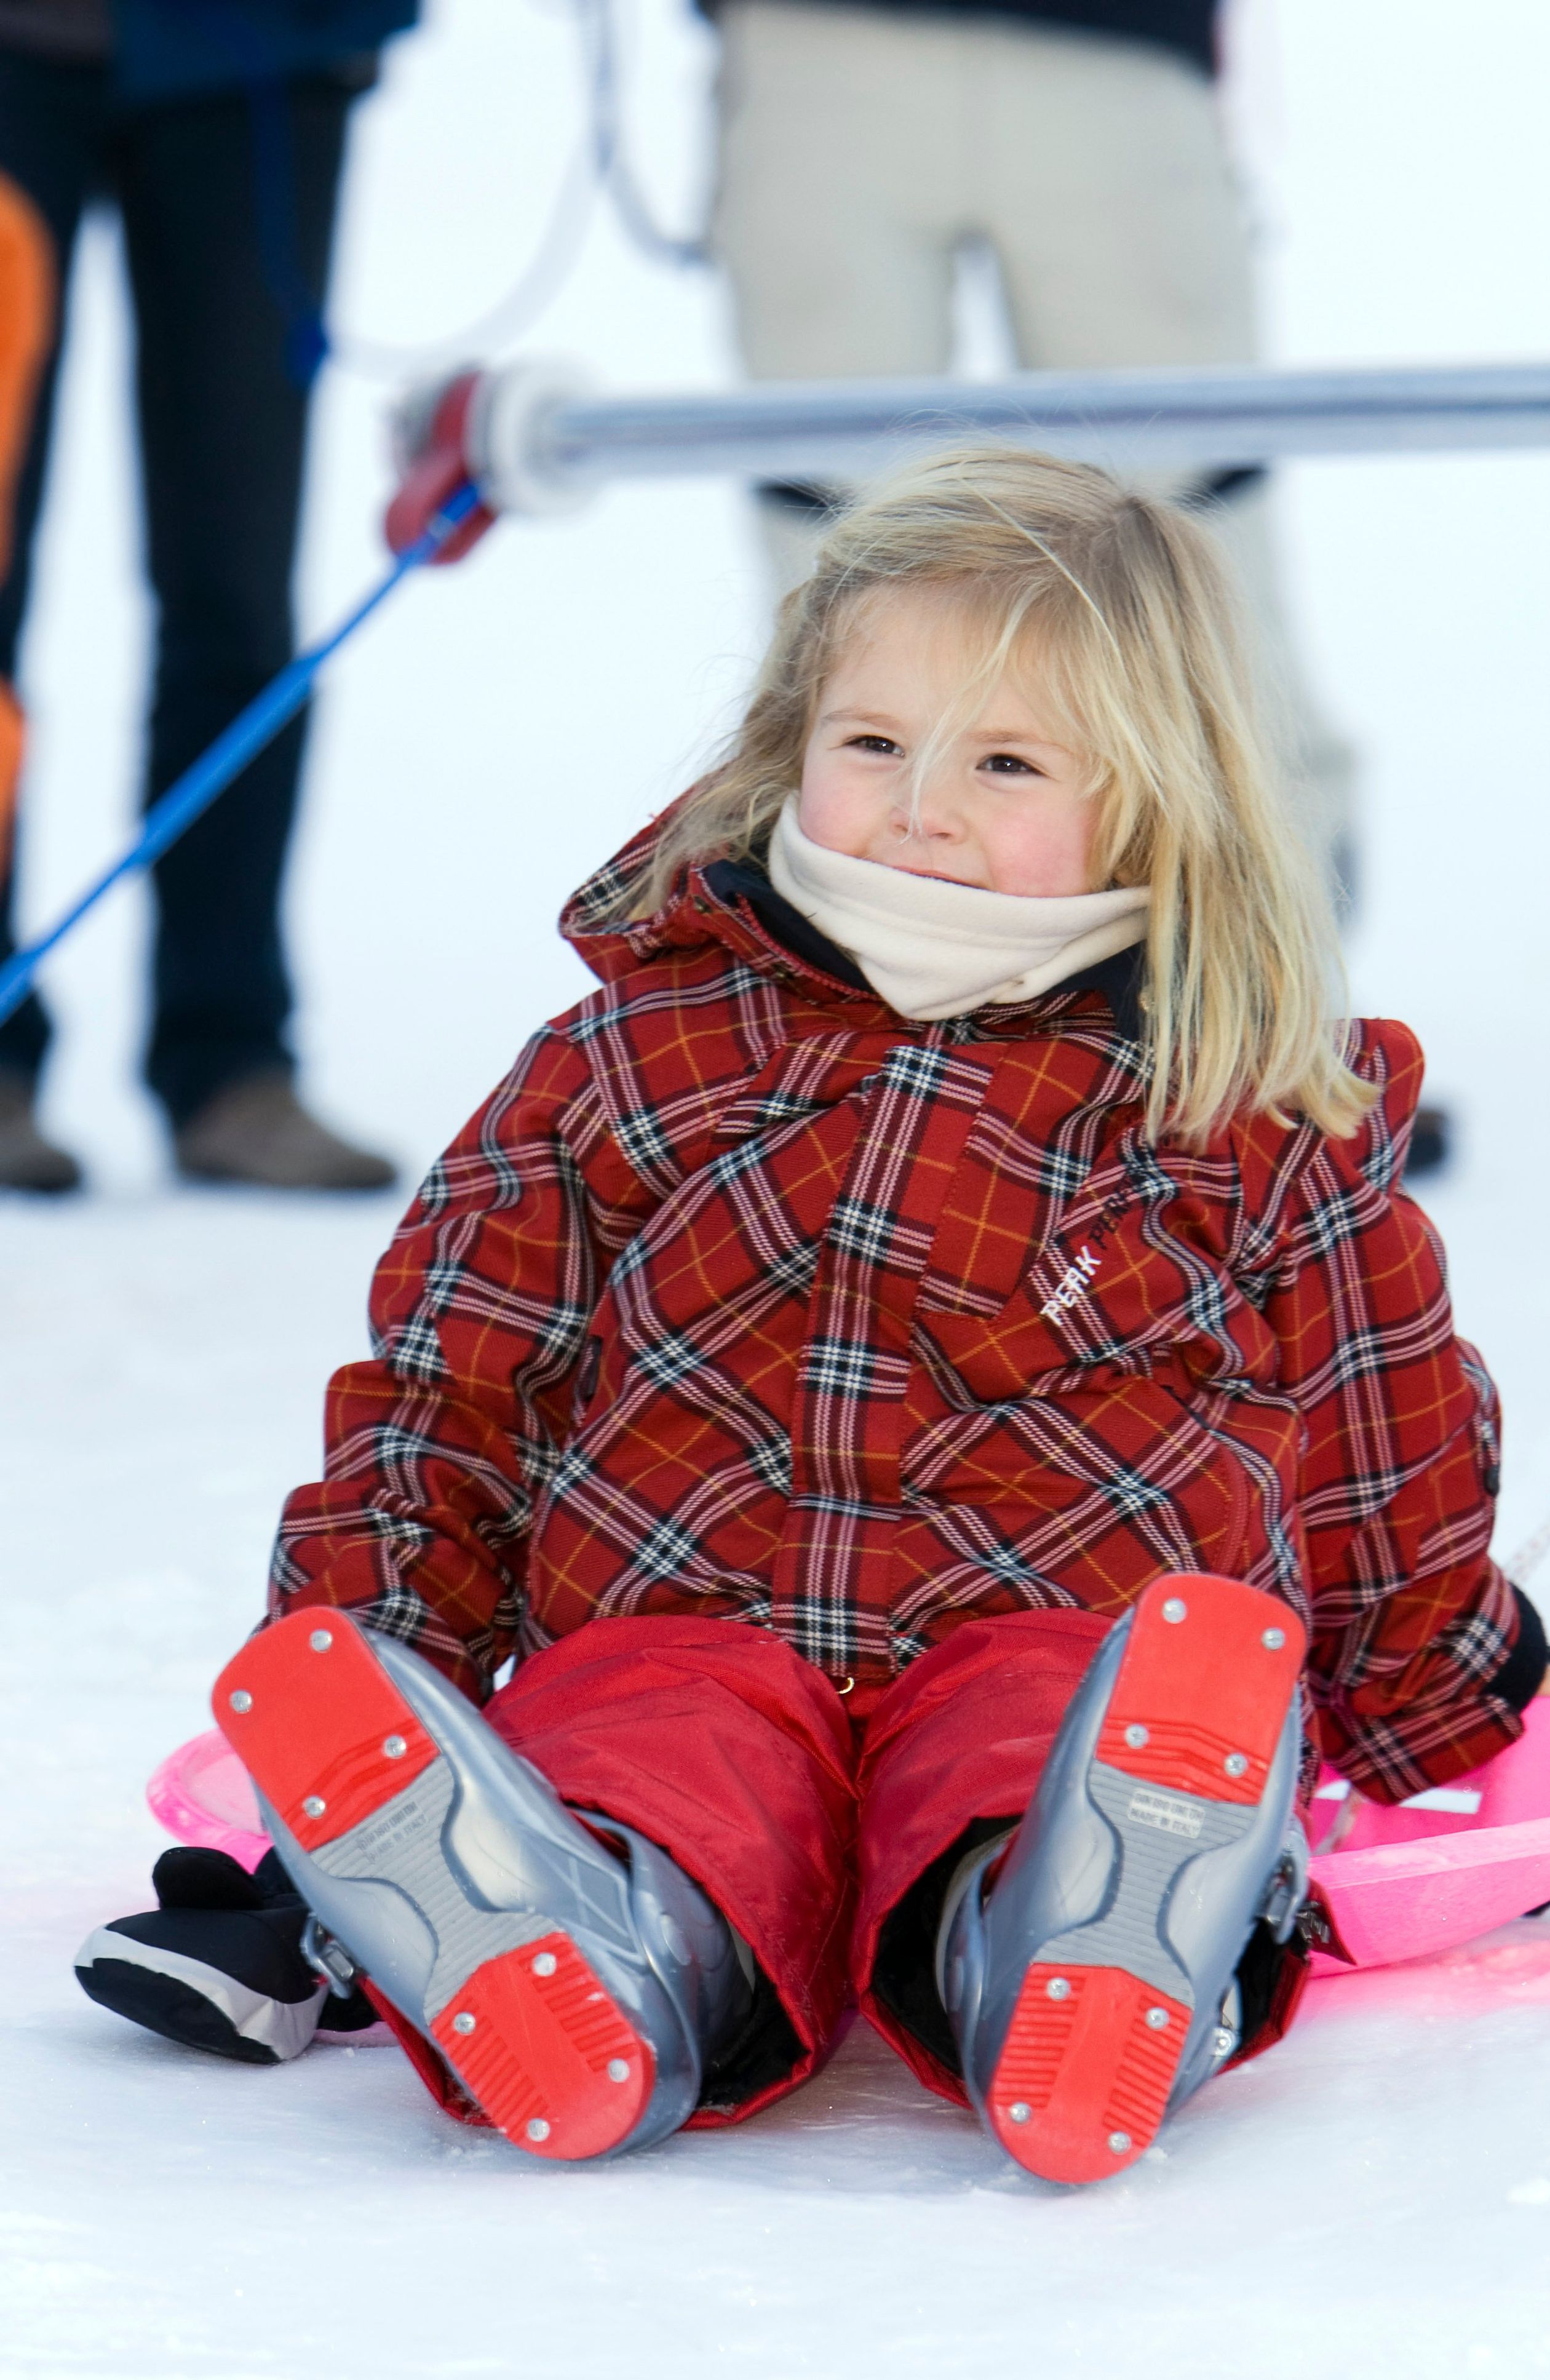 Ook de allerkleinste royals skiën mee! Dit is prinses Amalia in 2008. Haar zusje Ariane droeg